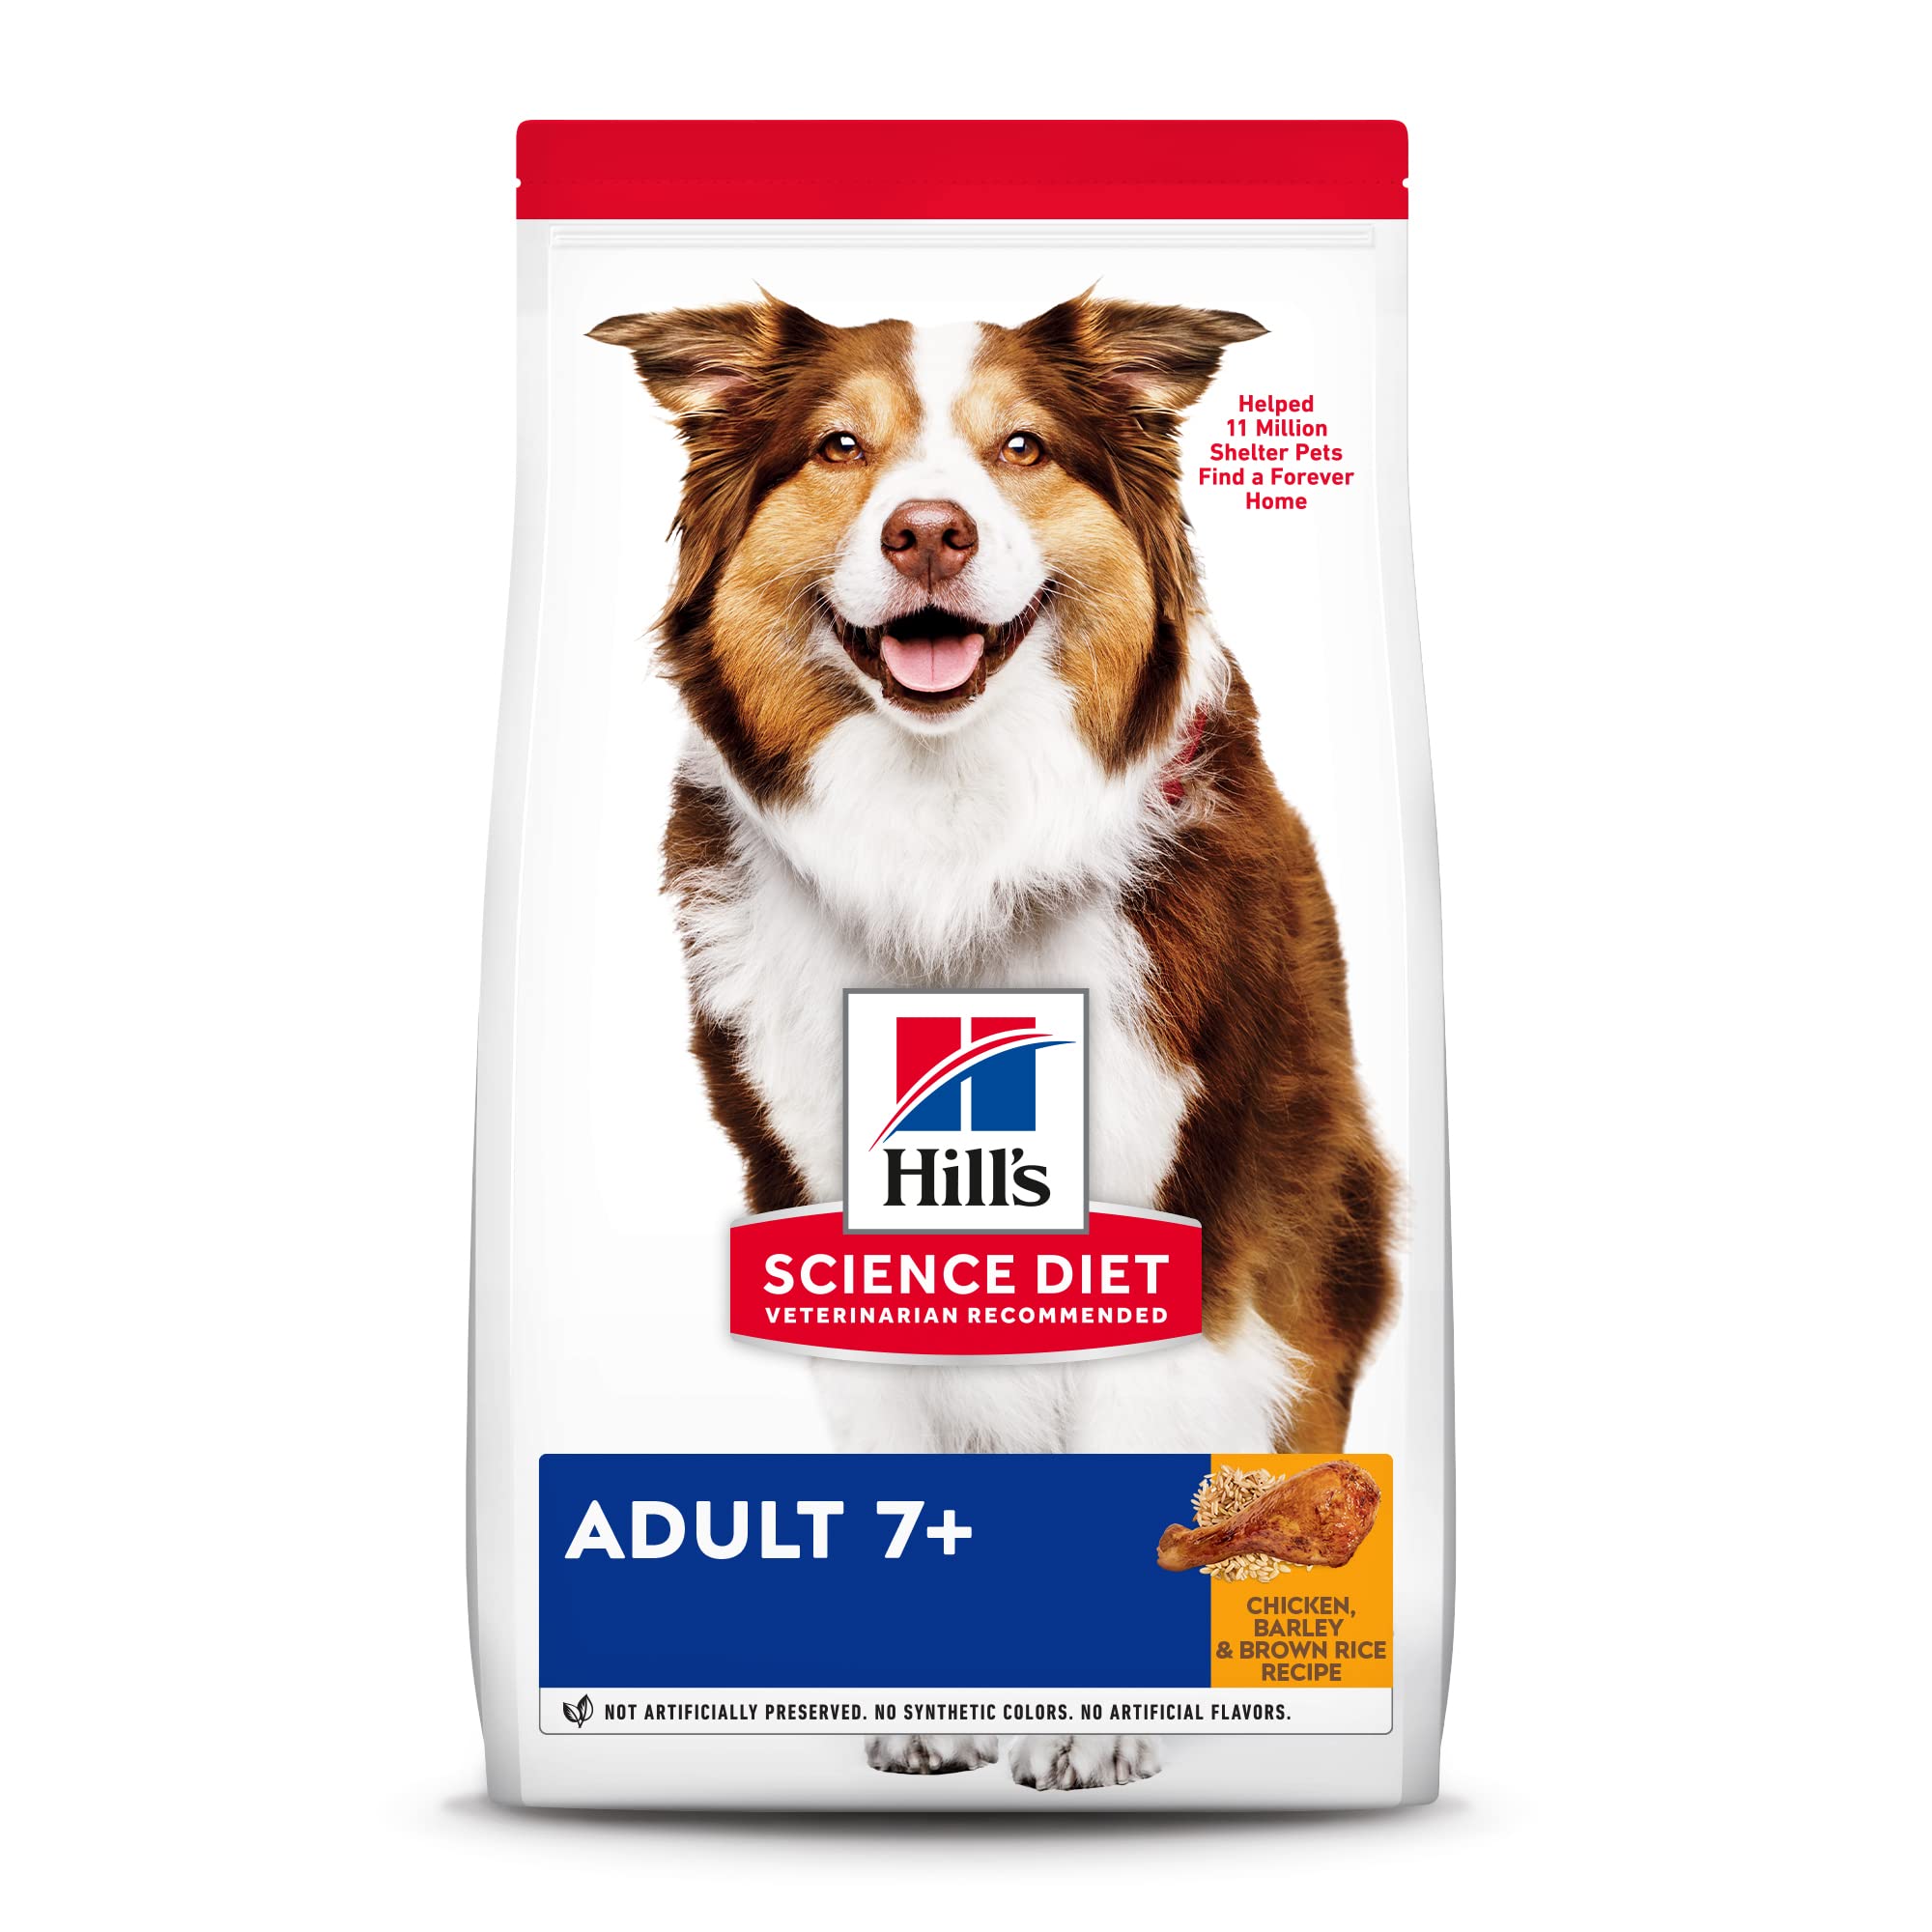 Hill's Science Diet ドライドッグフード、7歳以上のシニア犬用、チキンミール